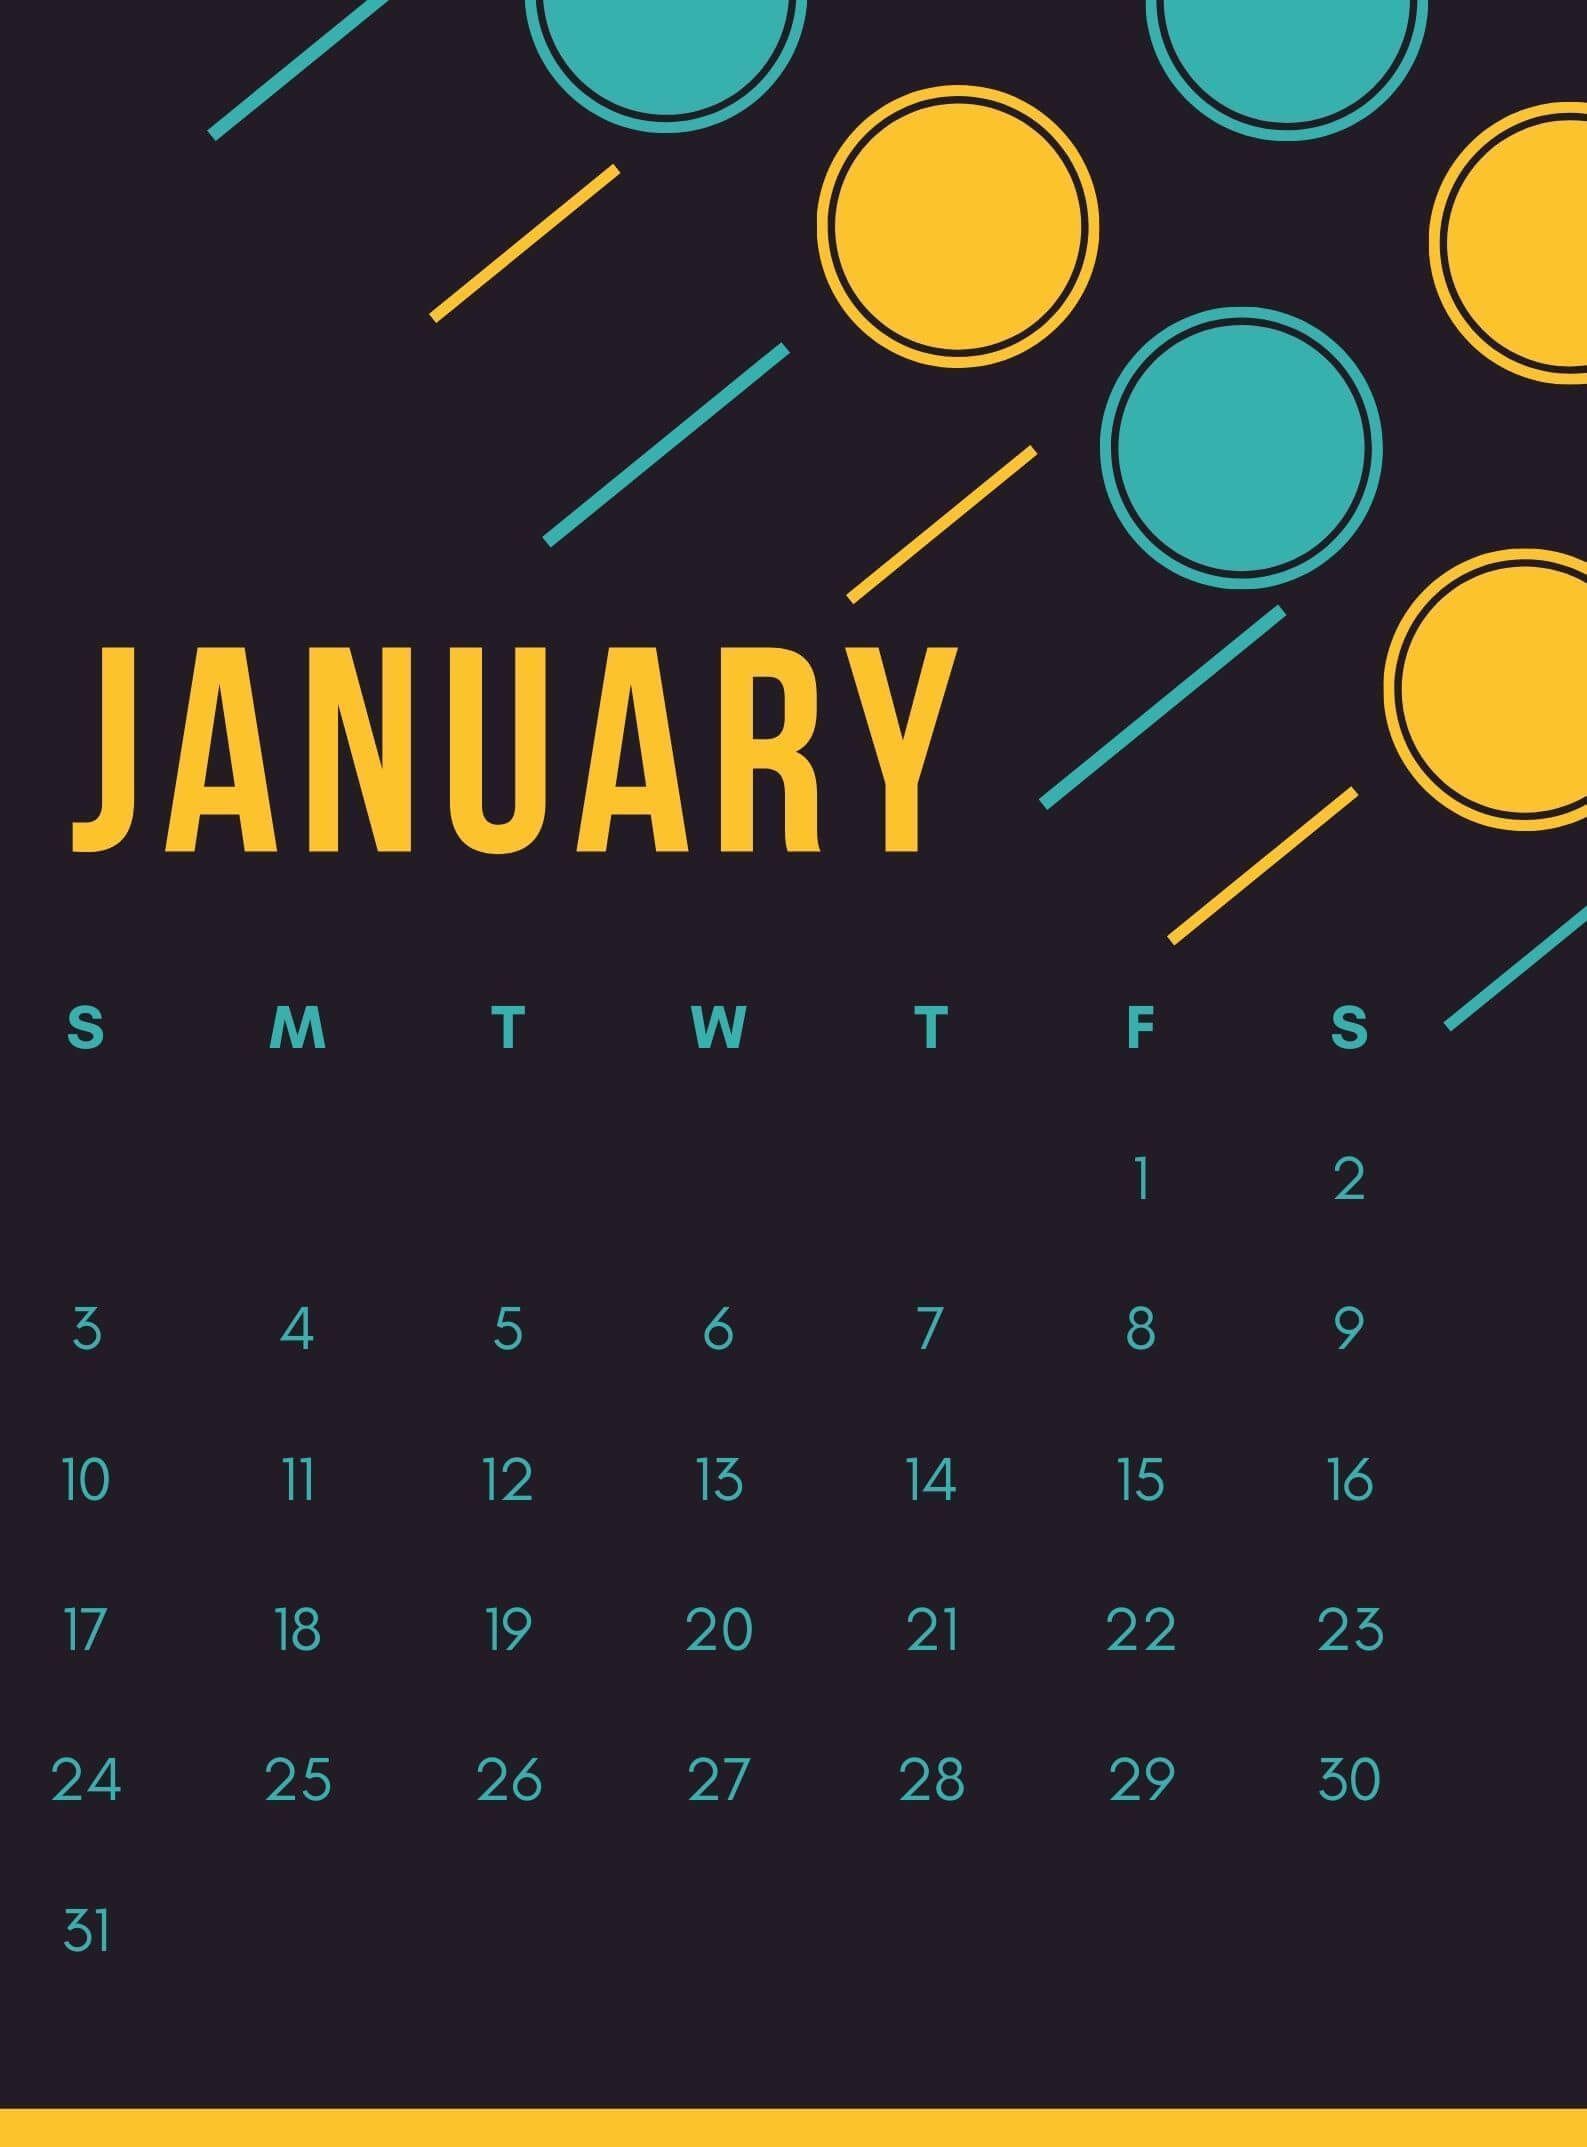 January 2021 Calendar Wallpaper Phone Image ID 15